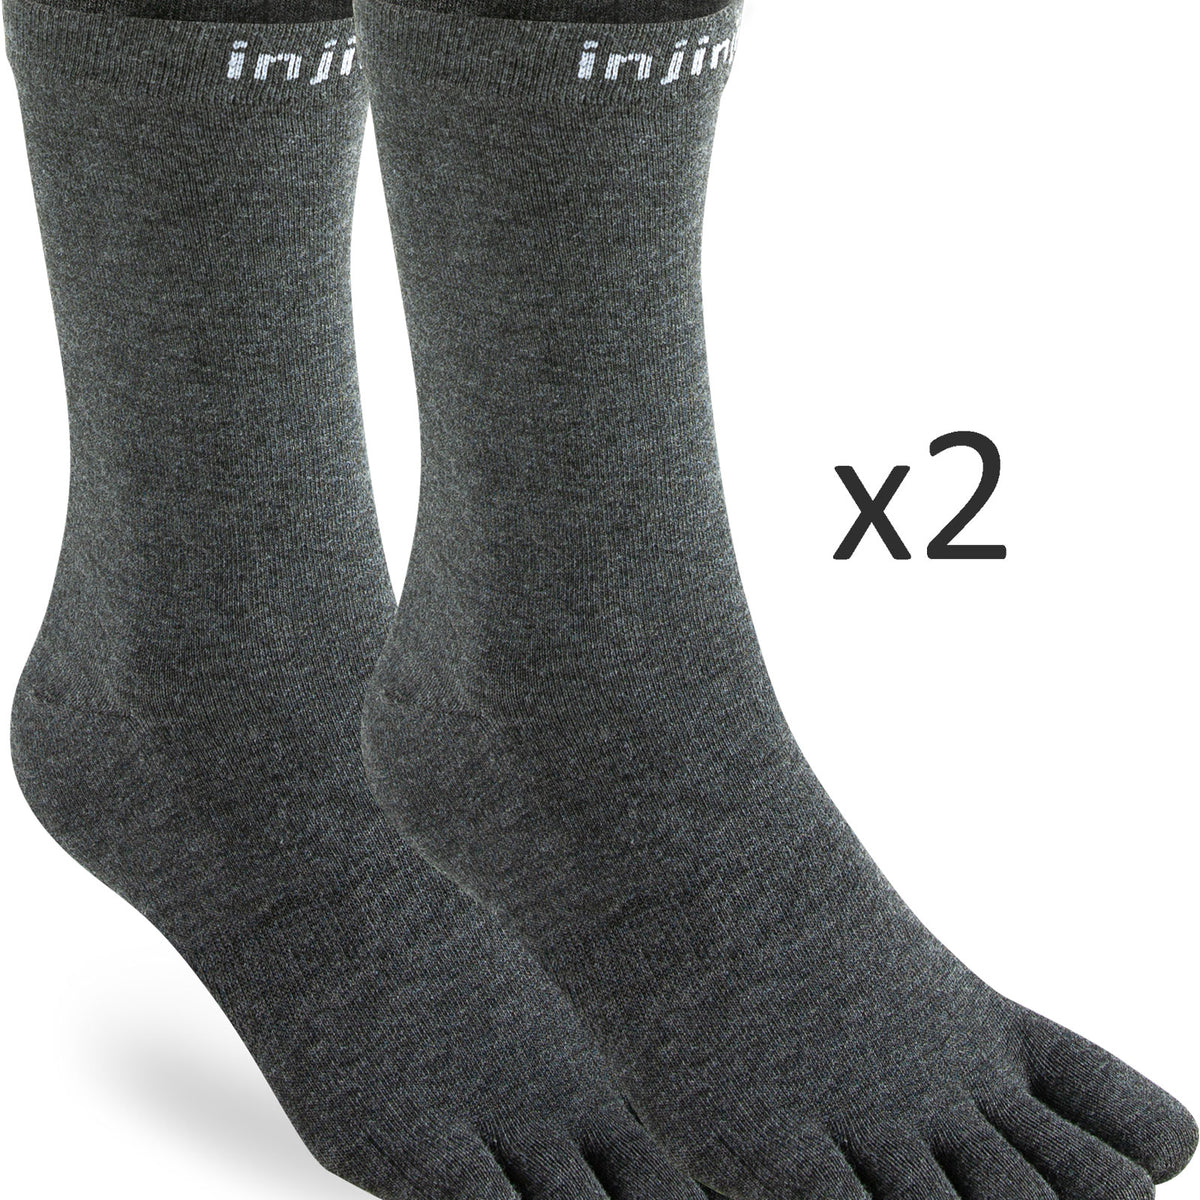 Injinji LINER Lightweight Toe Socks - Coolmax & NuWool